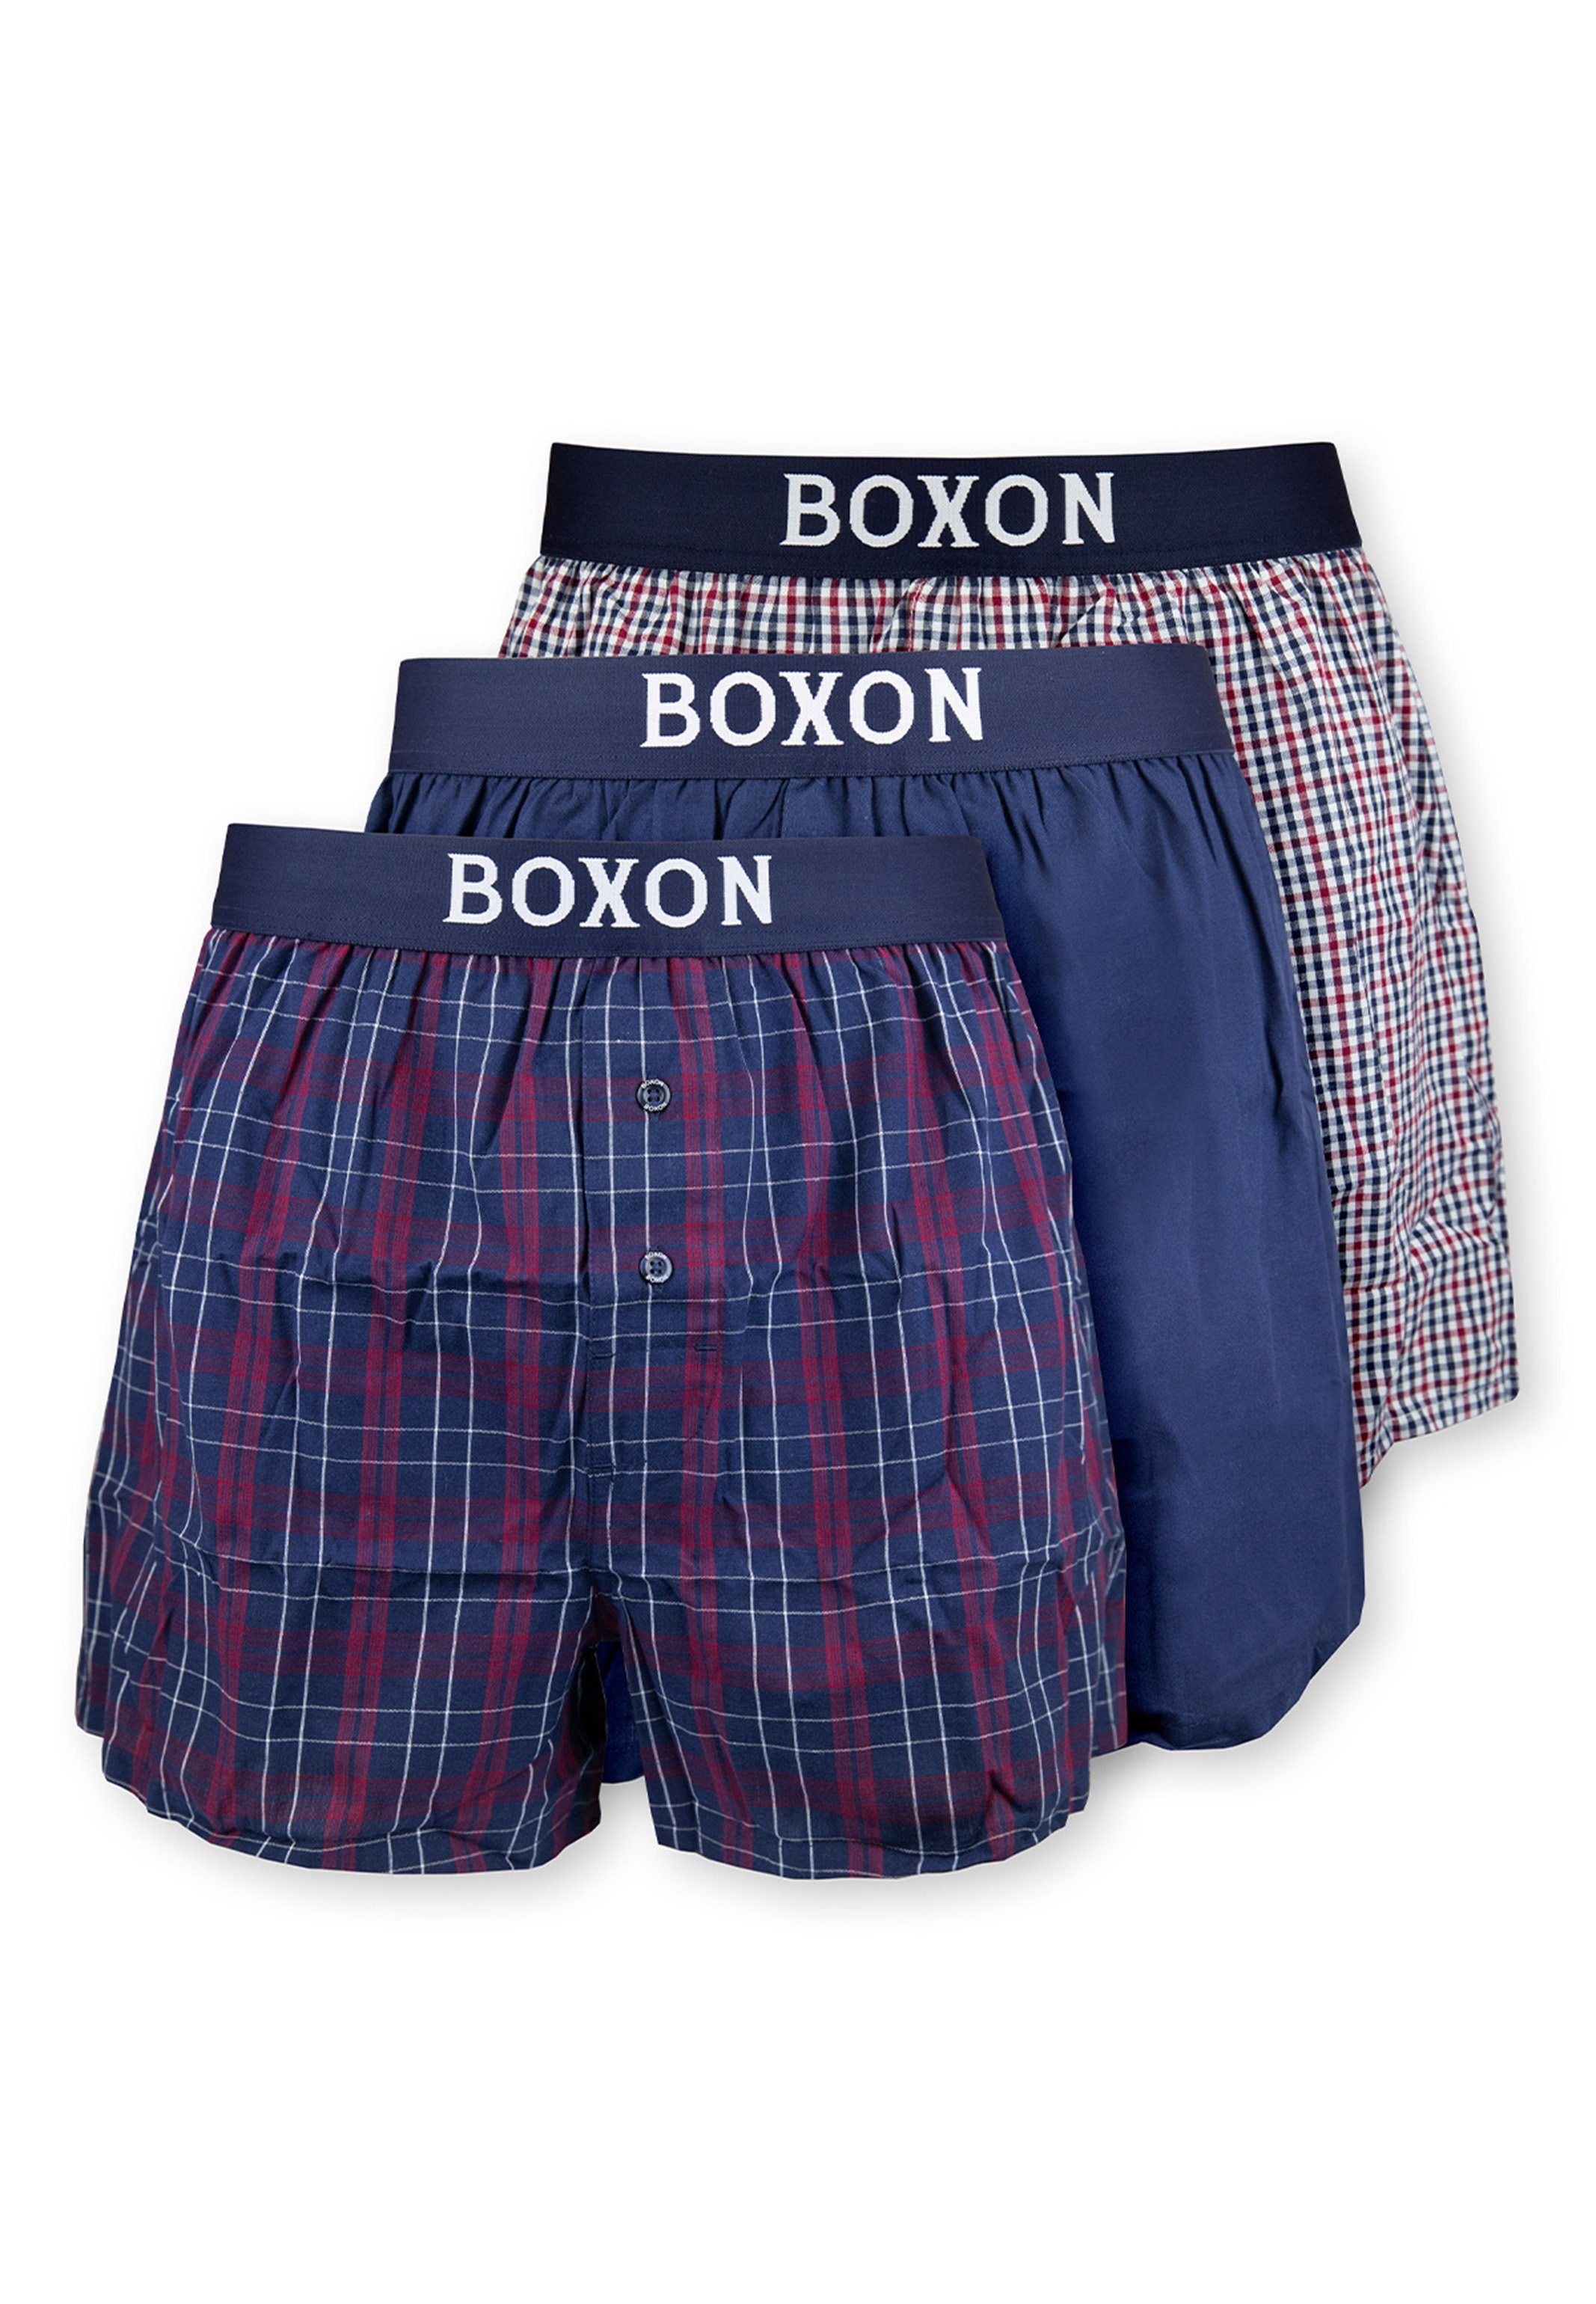 BOXON Boxershorts 3er Pack Web (Spar-Set, 3-St) Boxershorts - Baumwolle - Mit Eingriff - Softer Gummibund Bordeux